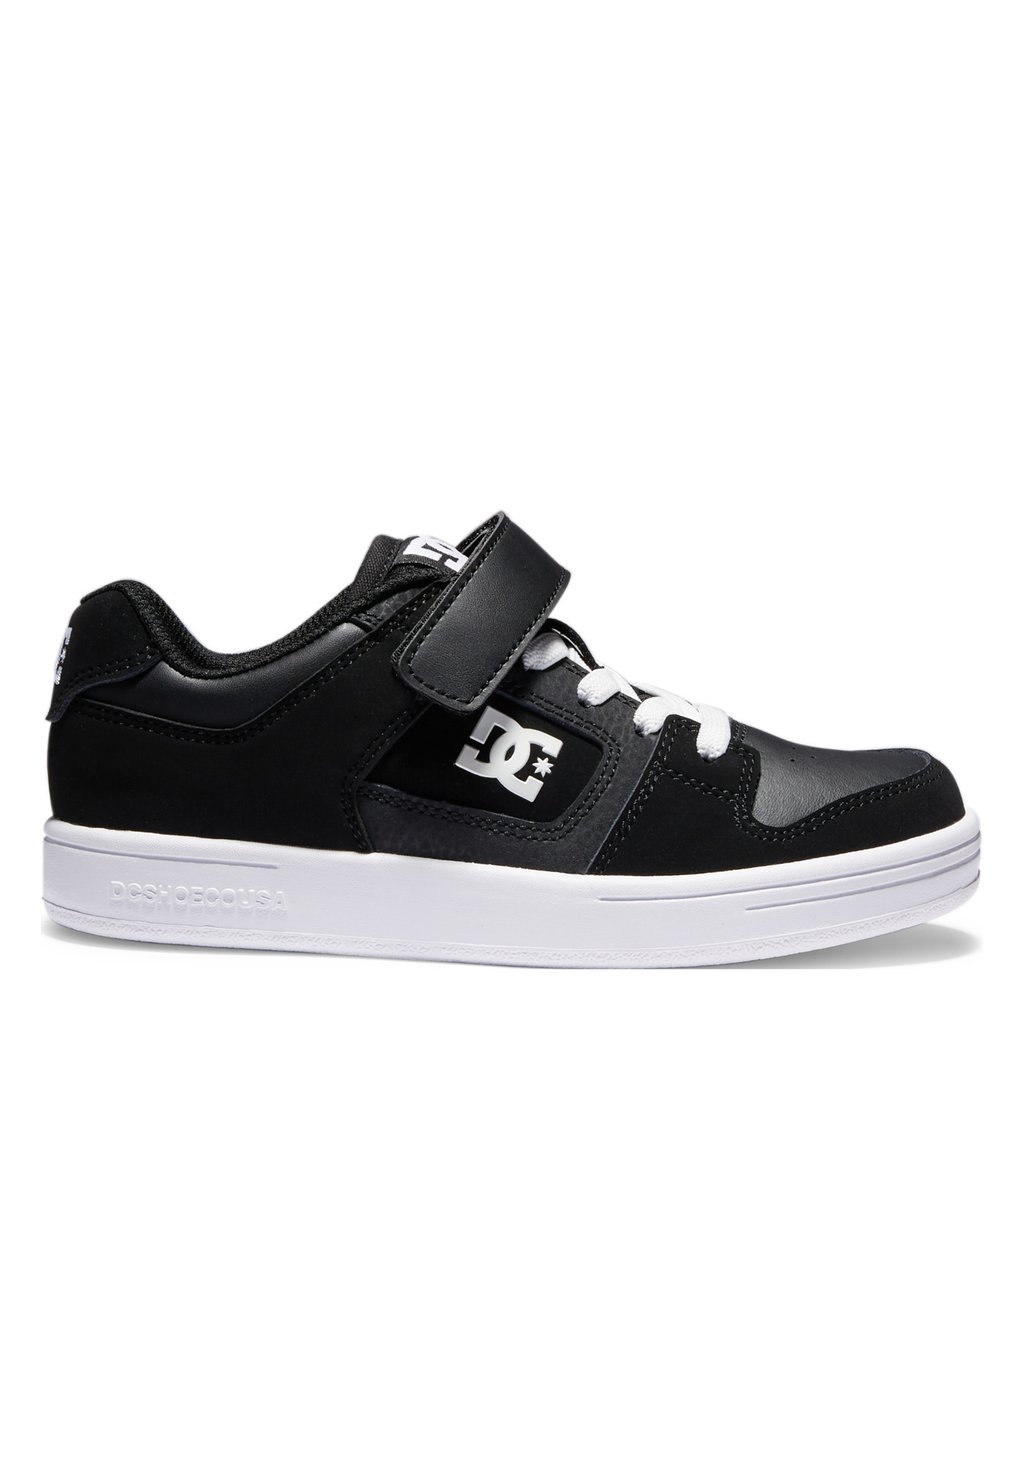 Низкие кроссовки Manteca 4 V DC Shoes, цвет black black white низкие кроссовки crisis 2 dc shoes цвет black white